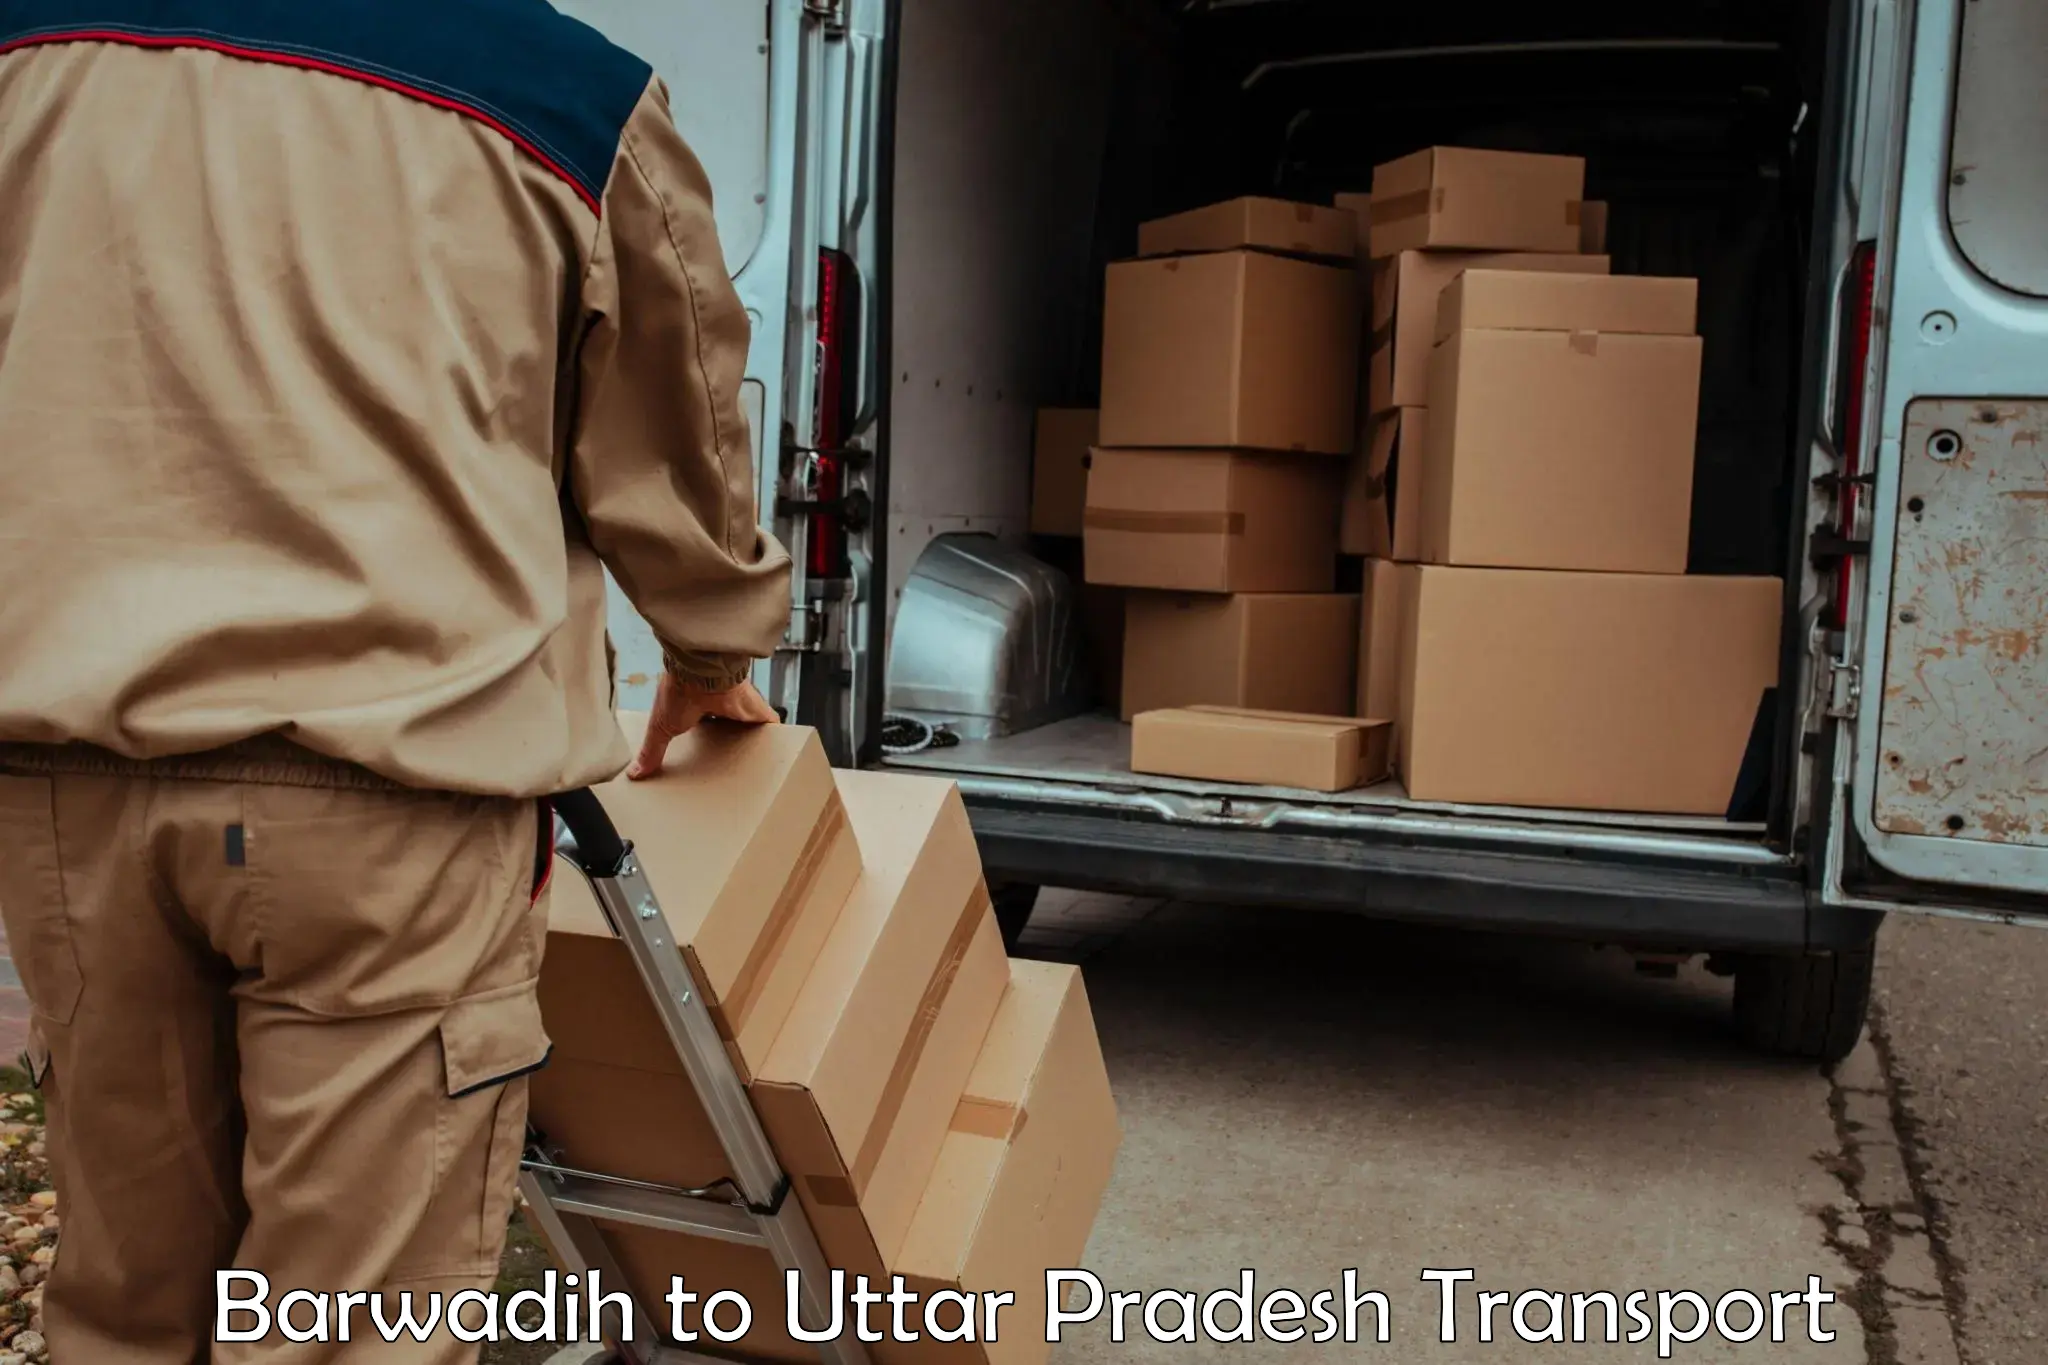 Truck transport companies in India Barwadih to Bijnor